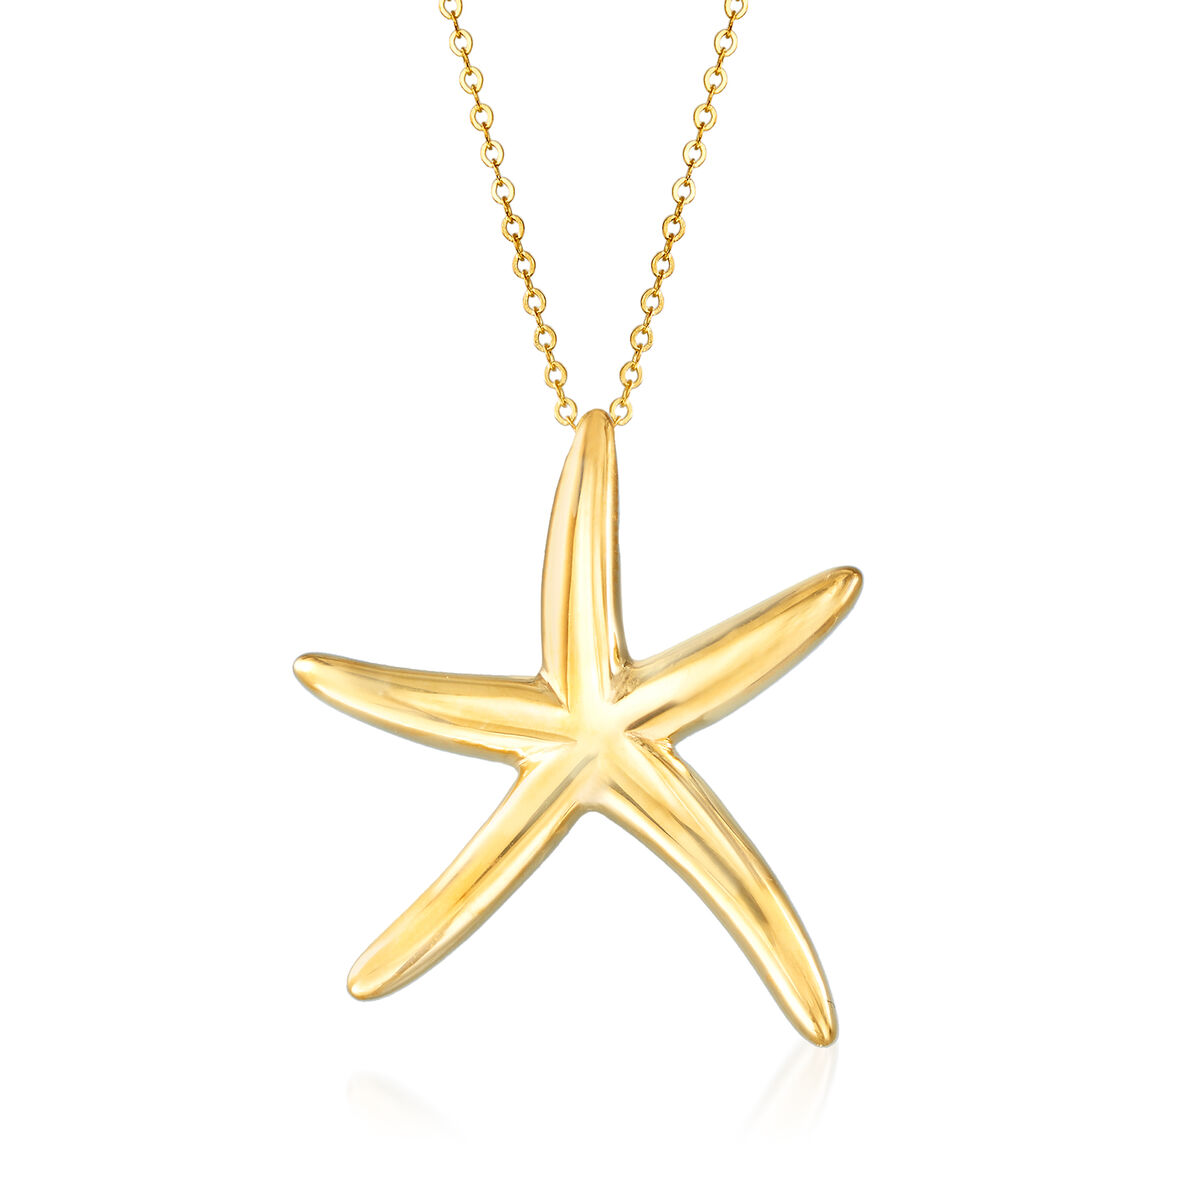 Jewel Tie Solid 14K Yellow Gold Starfish Pendant Charm 15x15 mm 